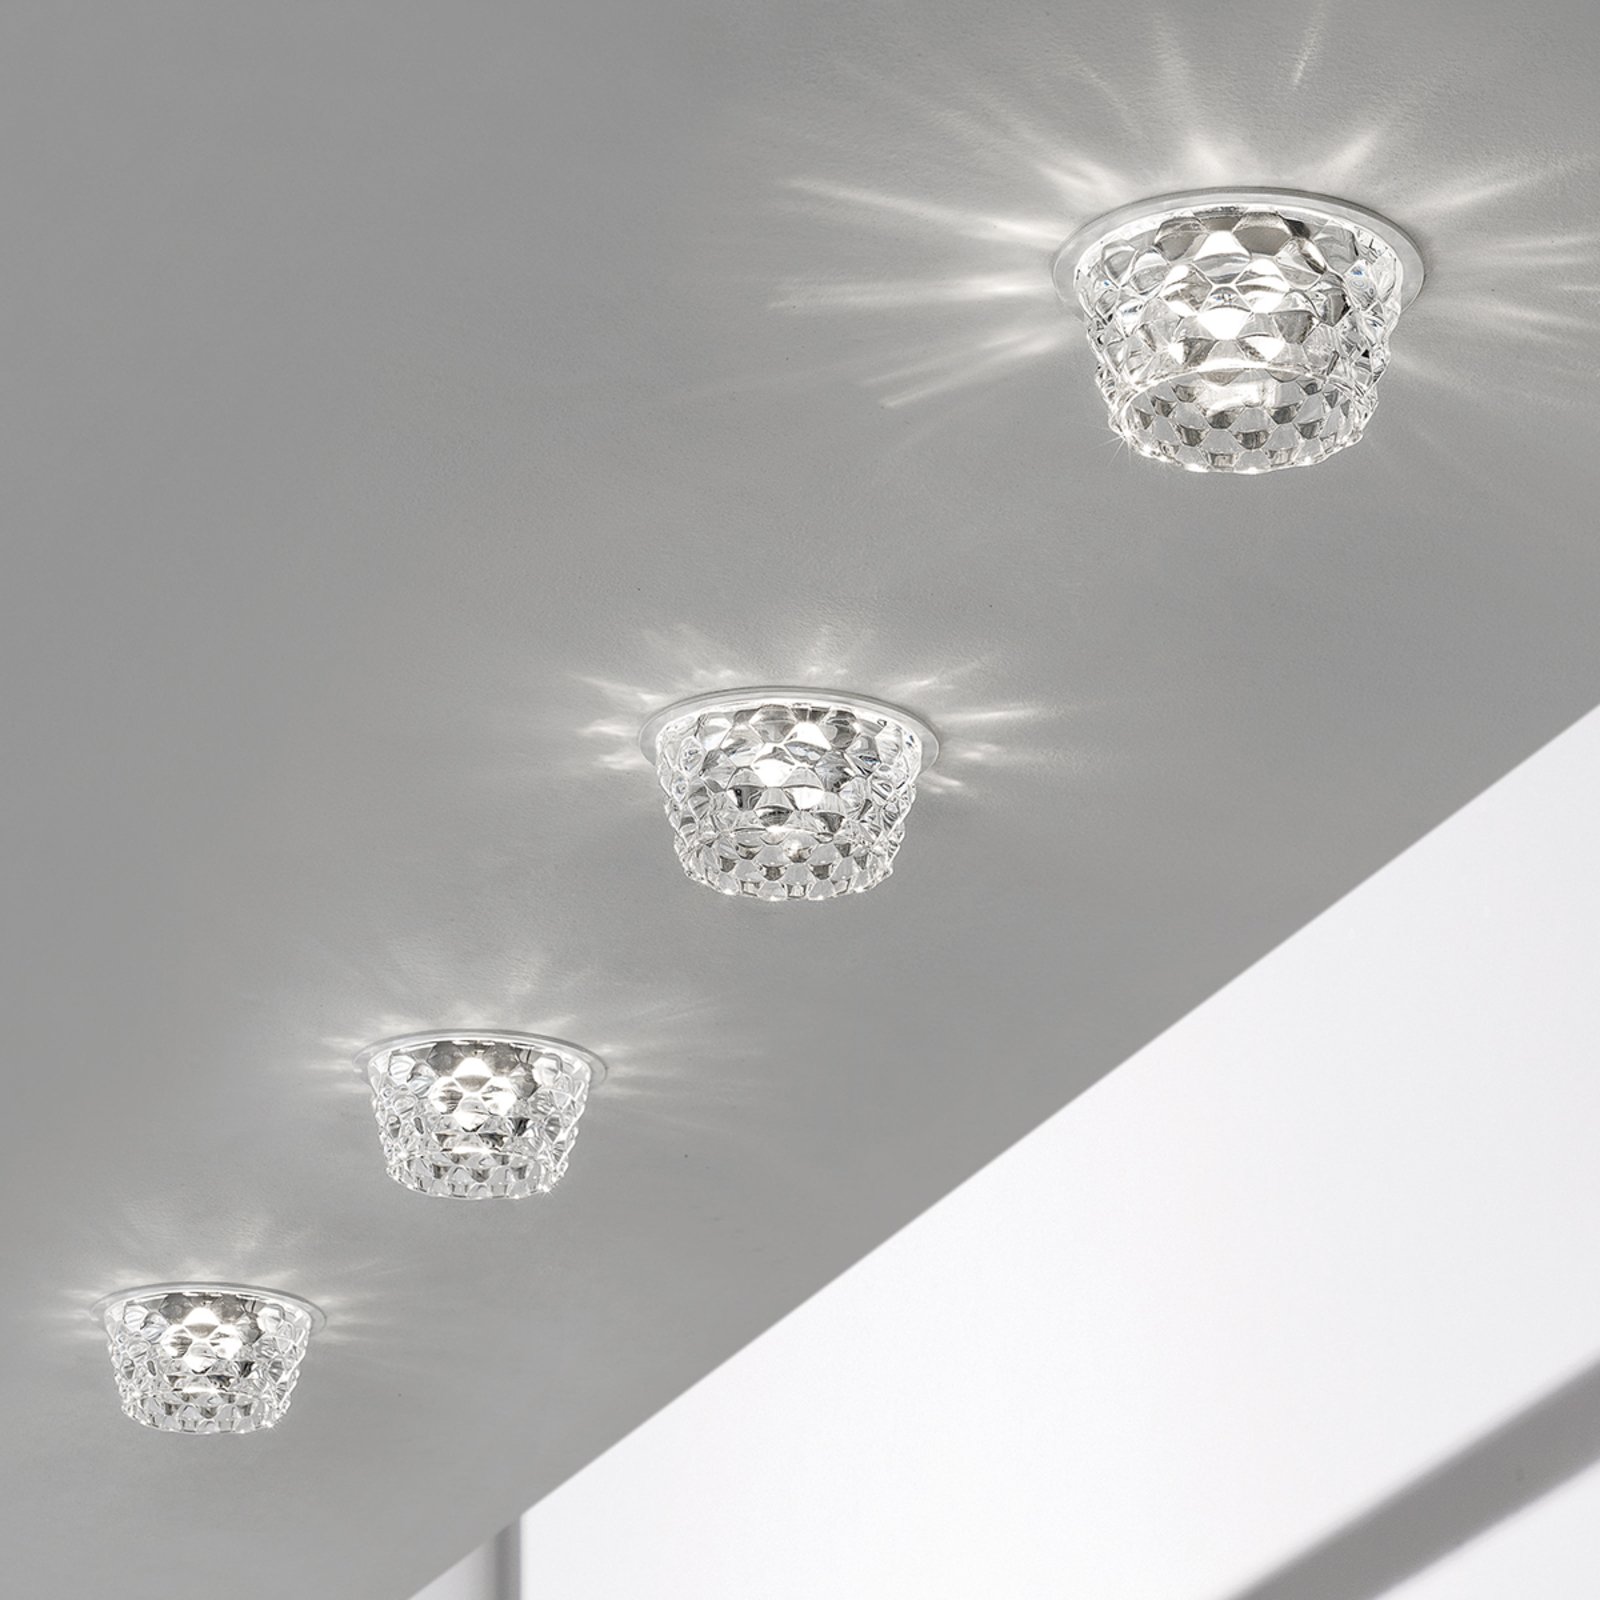 groet Dierbare Welsprekend Glazen LED plafond inbouwlamp helder | Lampen24.nl